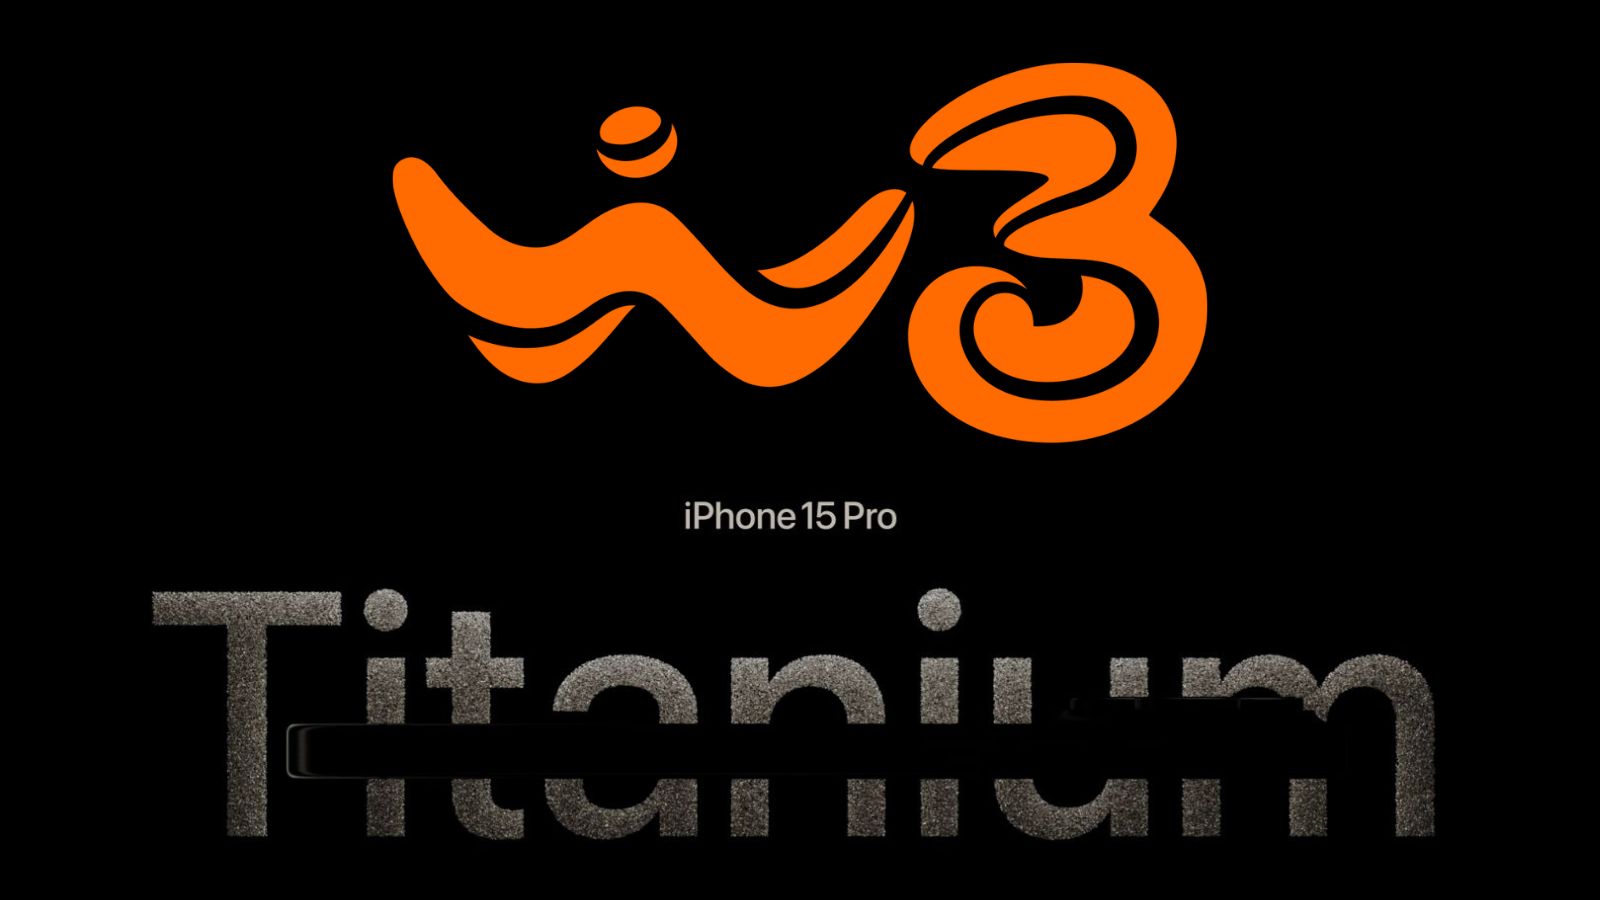 iPhone 15 Pro WindTre